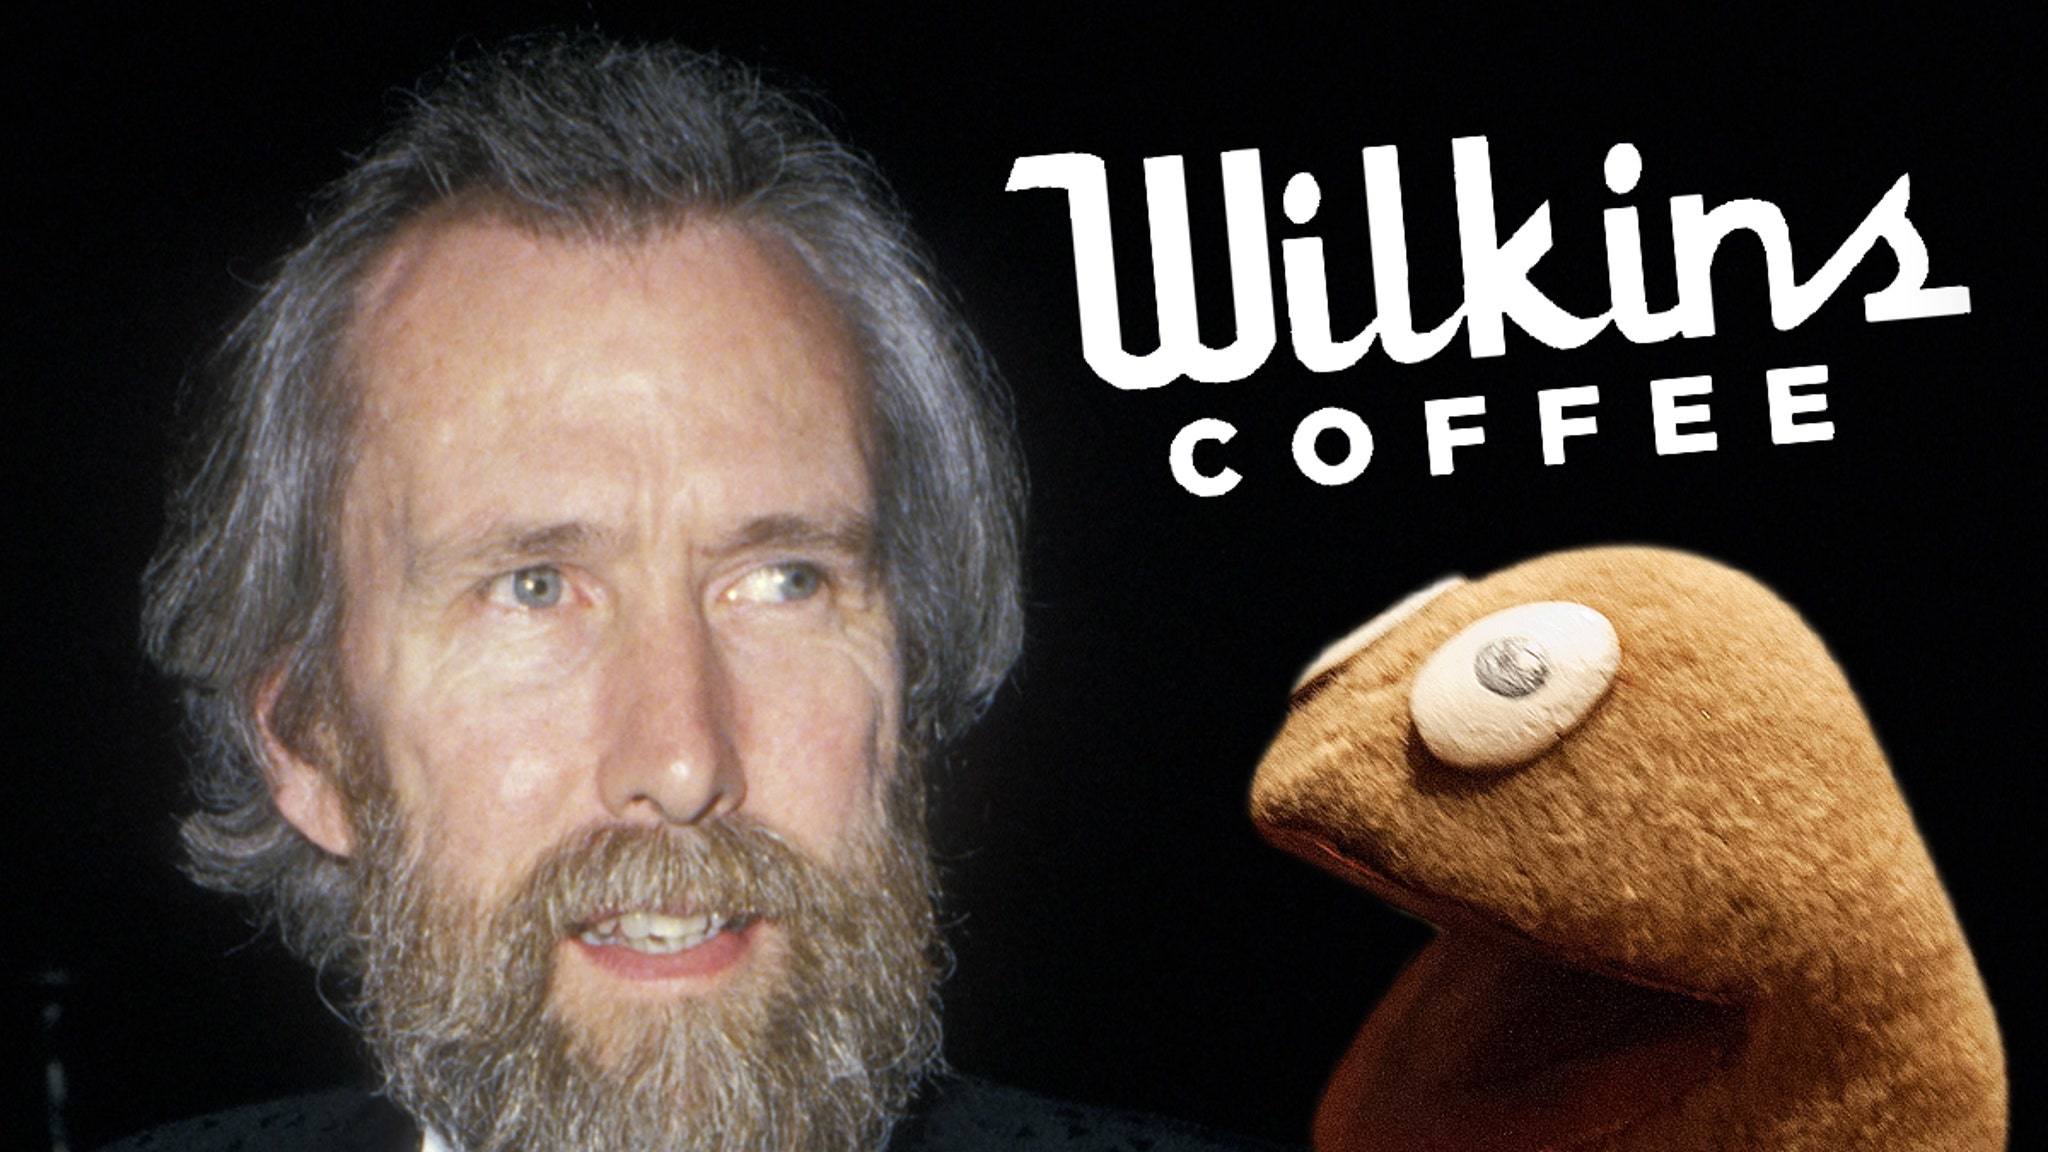 Jim Henson's Old Wilkins Coffee Ads Resurface, Boy Are They Dark - TMZ